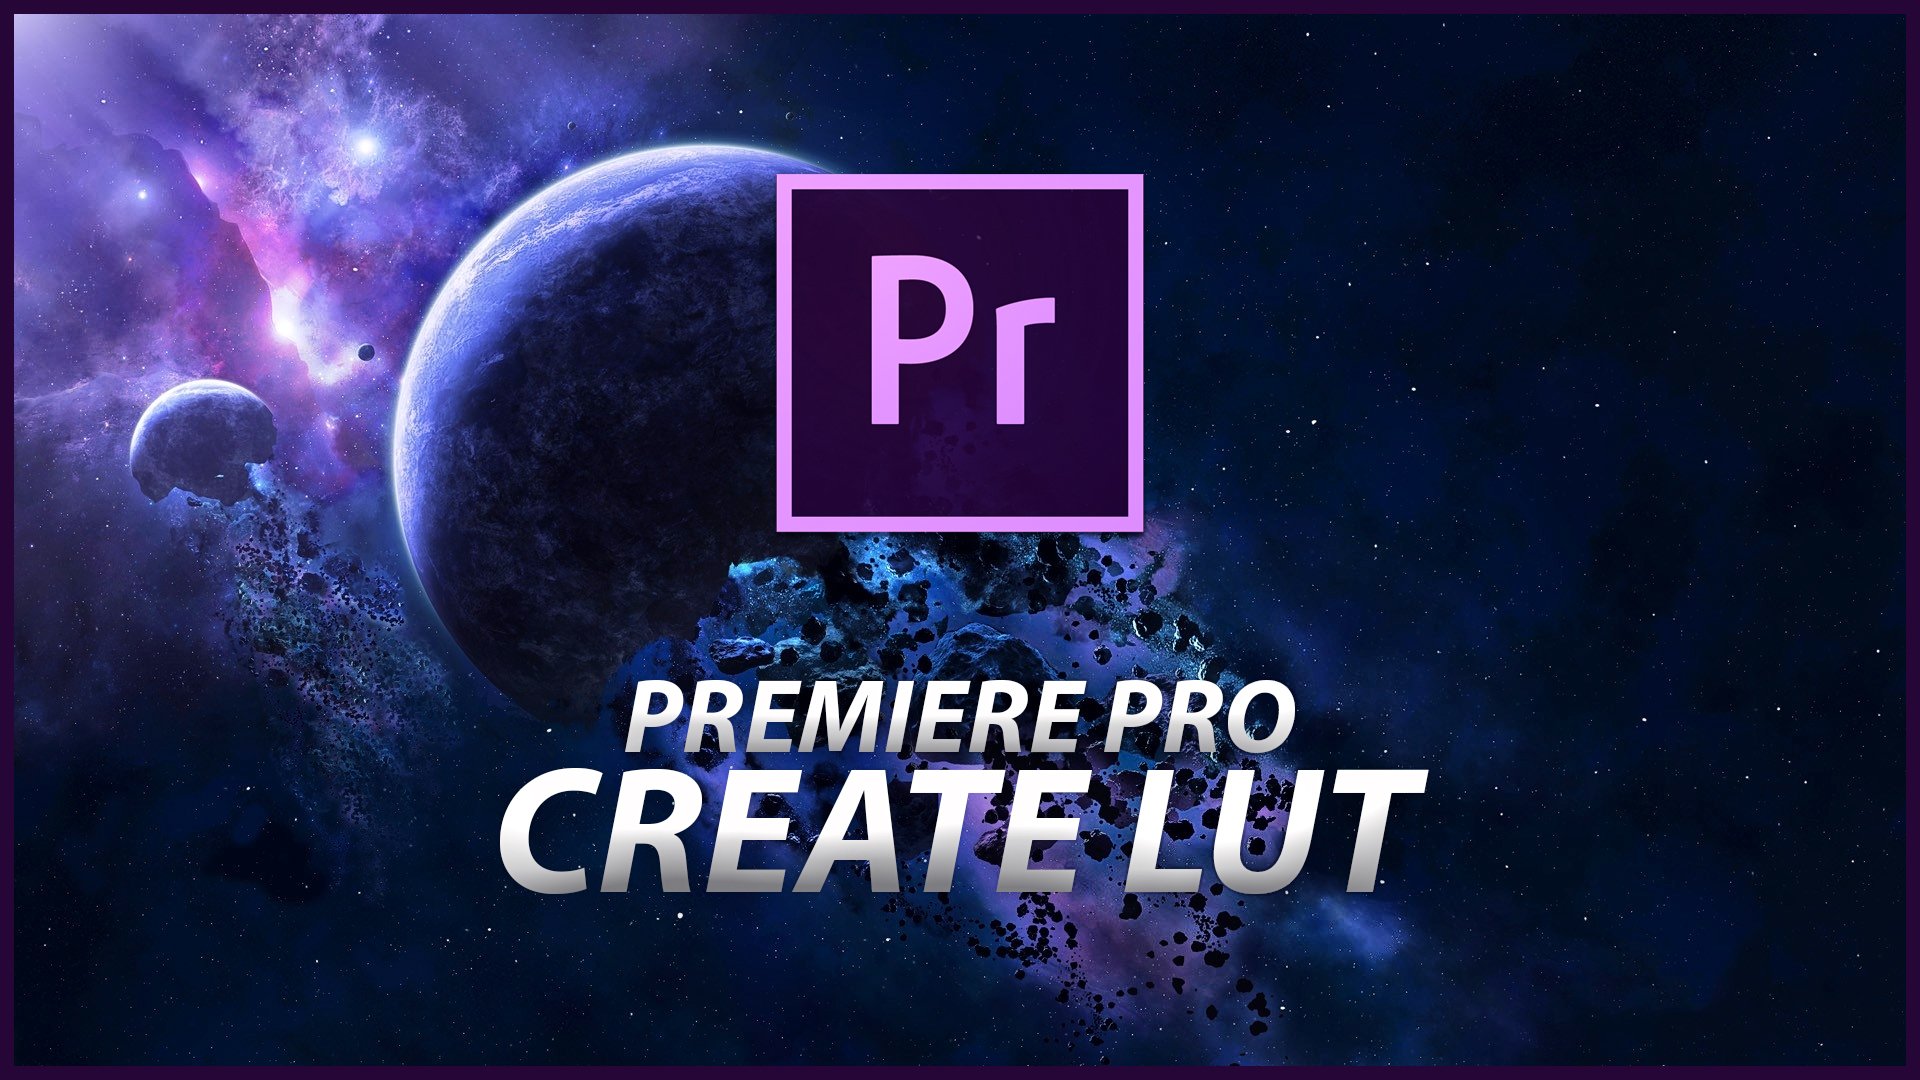 Premiere Pro CC - Create LUT / Создание LUT (S E R E B R Y A K O V)